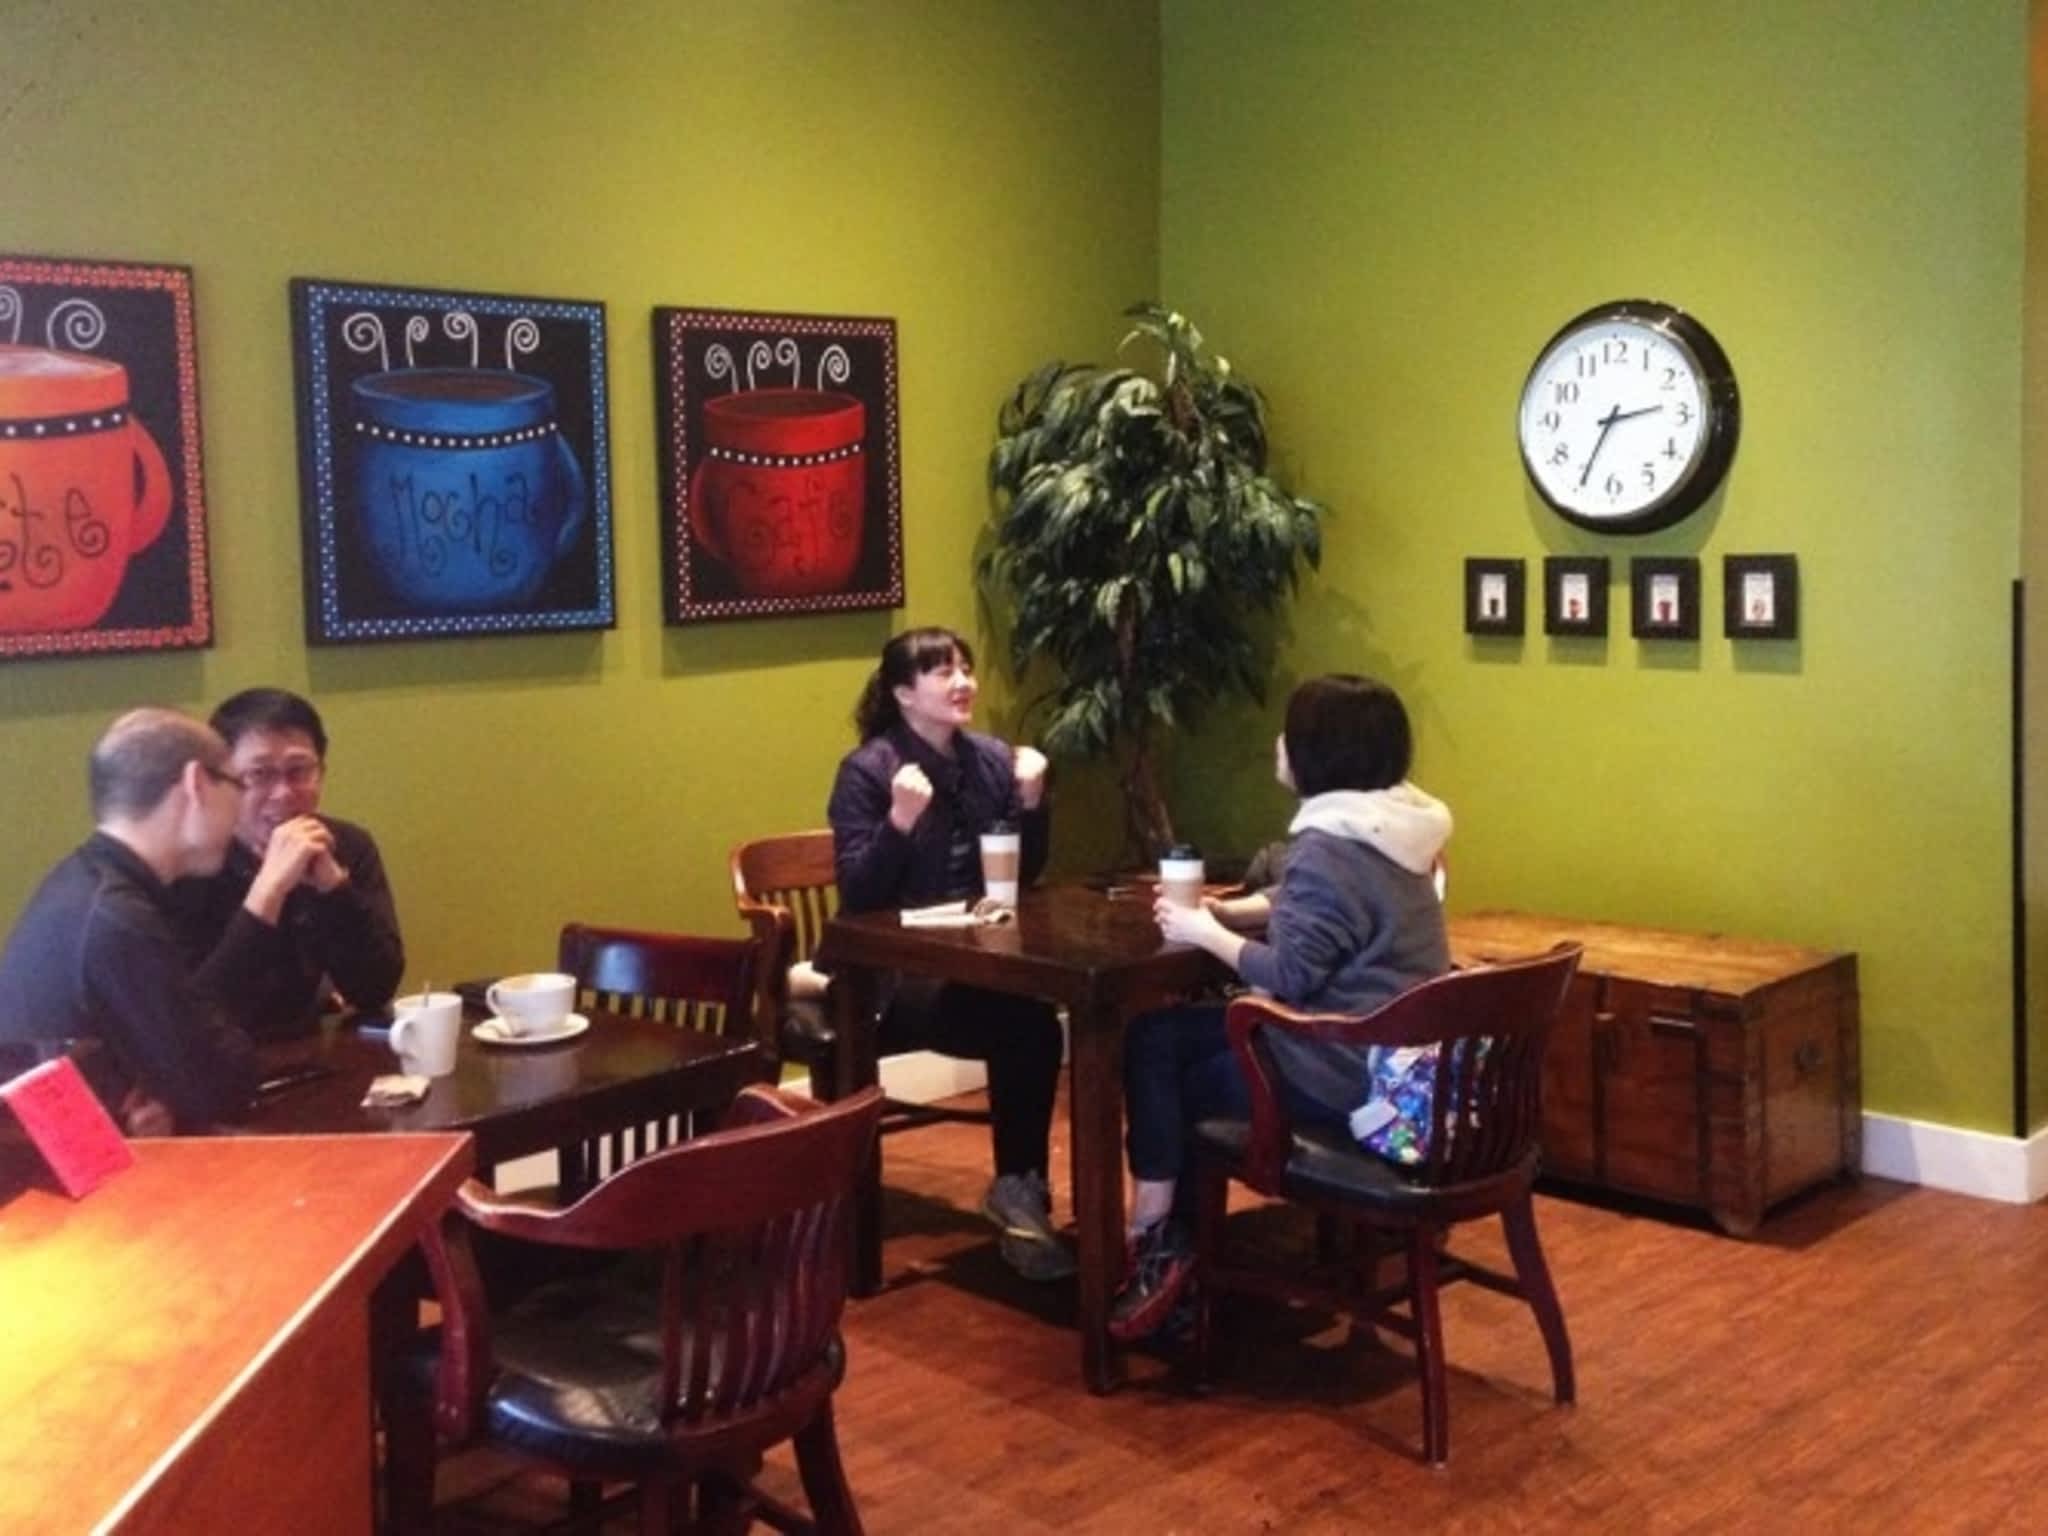 photo Wick's Cafe